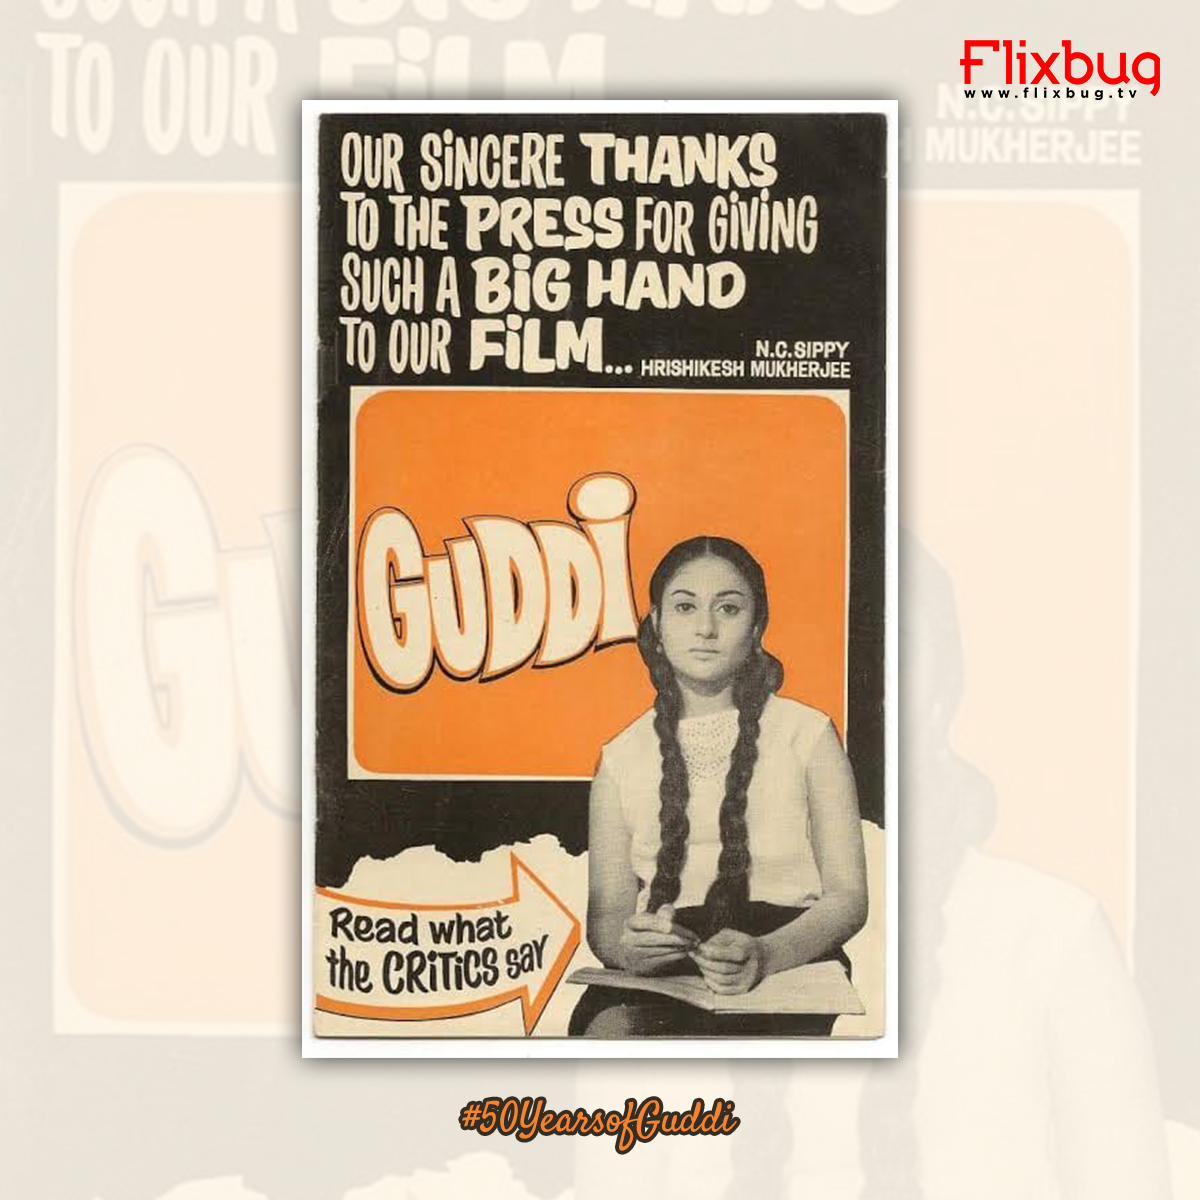 #Guddi is a 1971 Film, known as the turning-point in the filmy career of Jaya Bachchan. It was directed by #HrishikeshMukherjee and written by #Gulzar. 

#JayaBachchan | @aapkadharam | #UtpalDutt | #SamitBhanja | #NCSippy

@cinemaazi @BollyMemories @CinemaRareIN 

#50YearsofGuddi